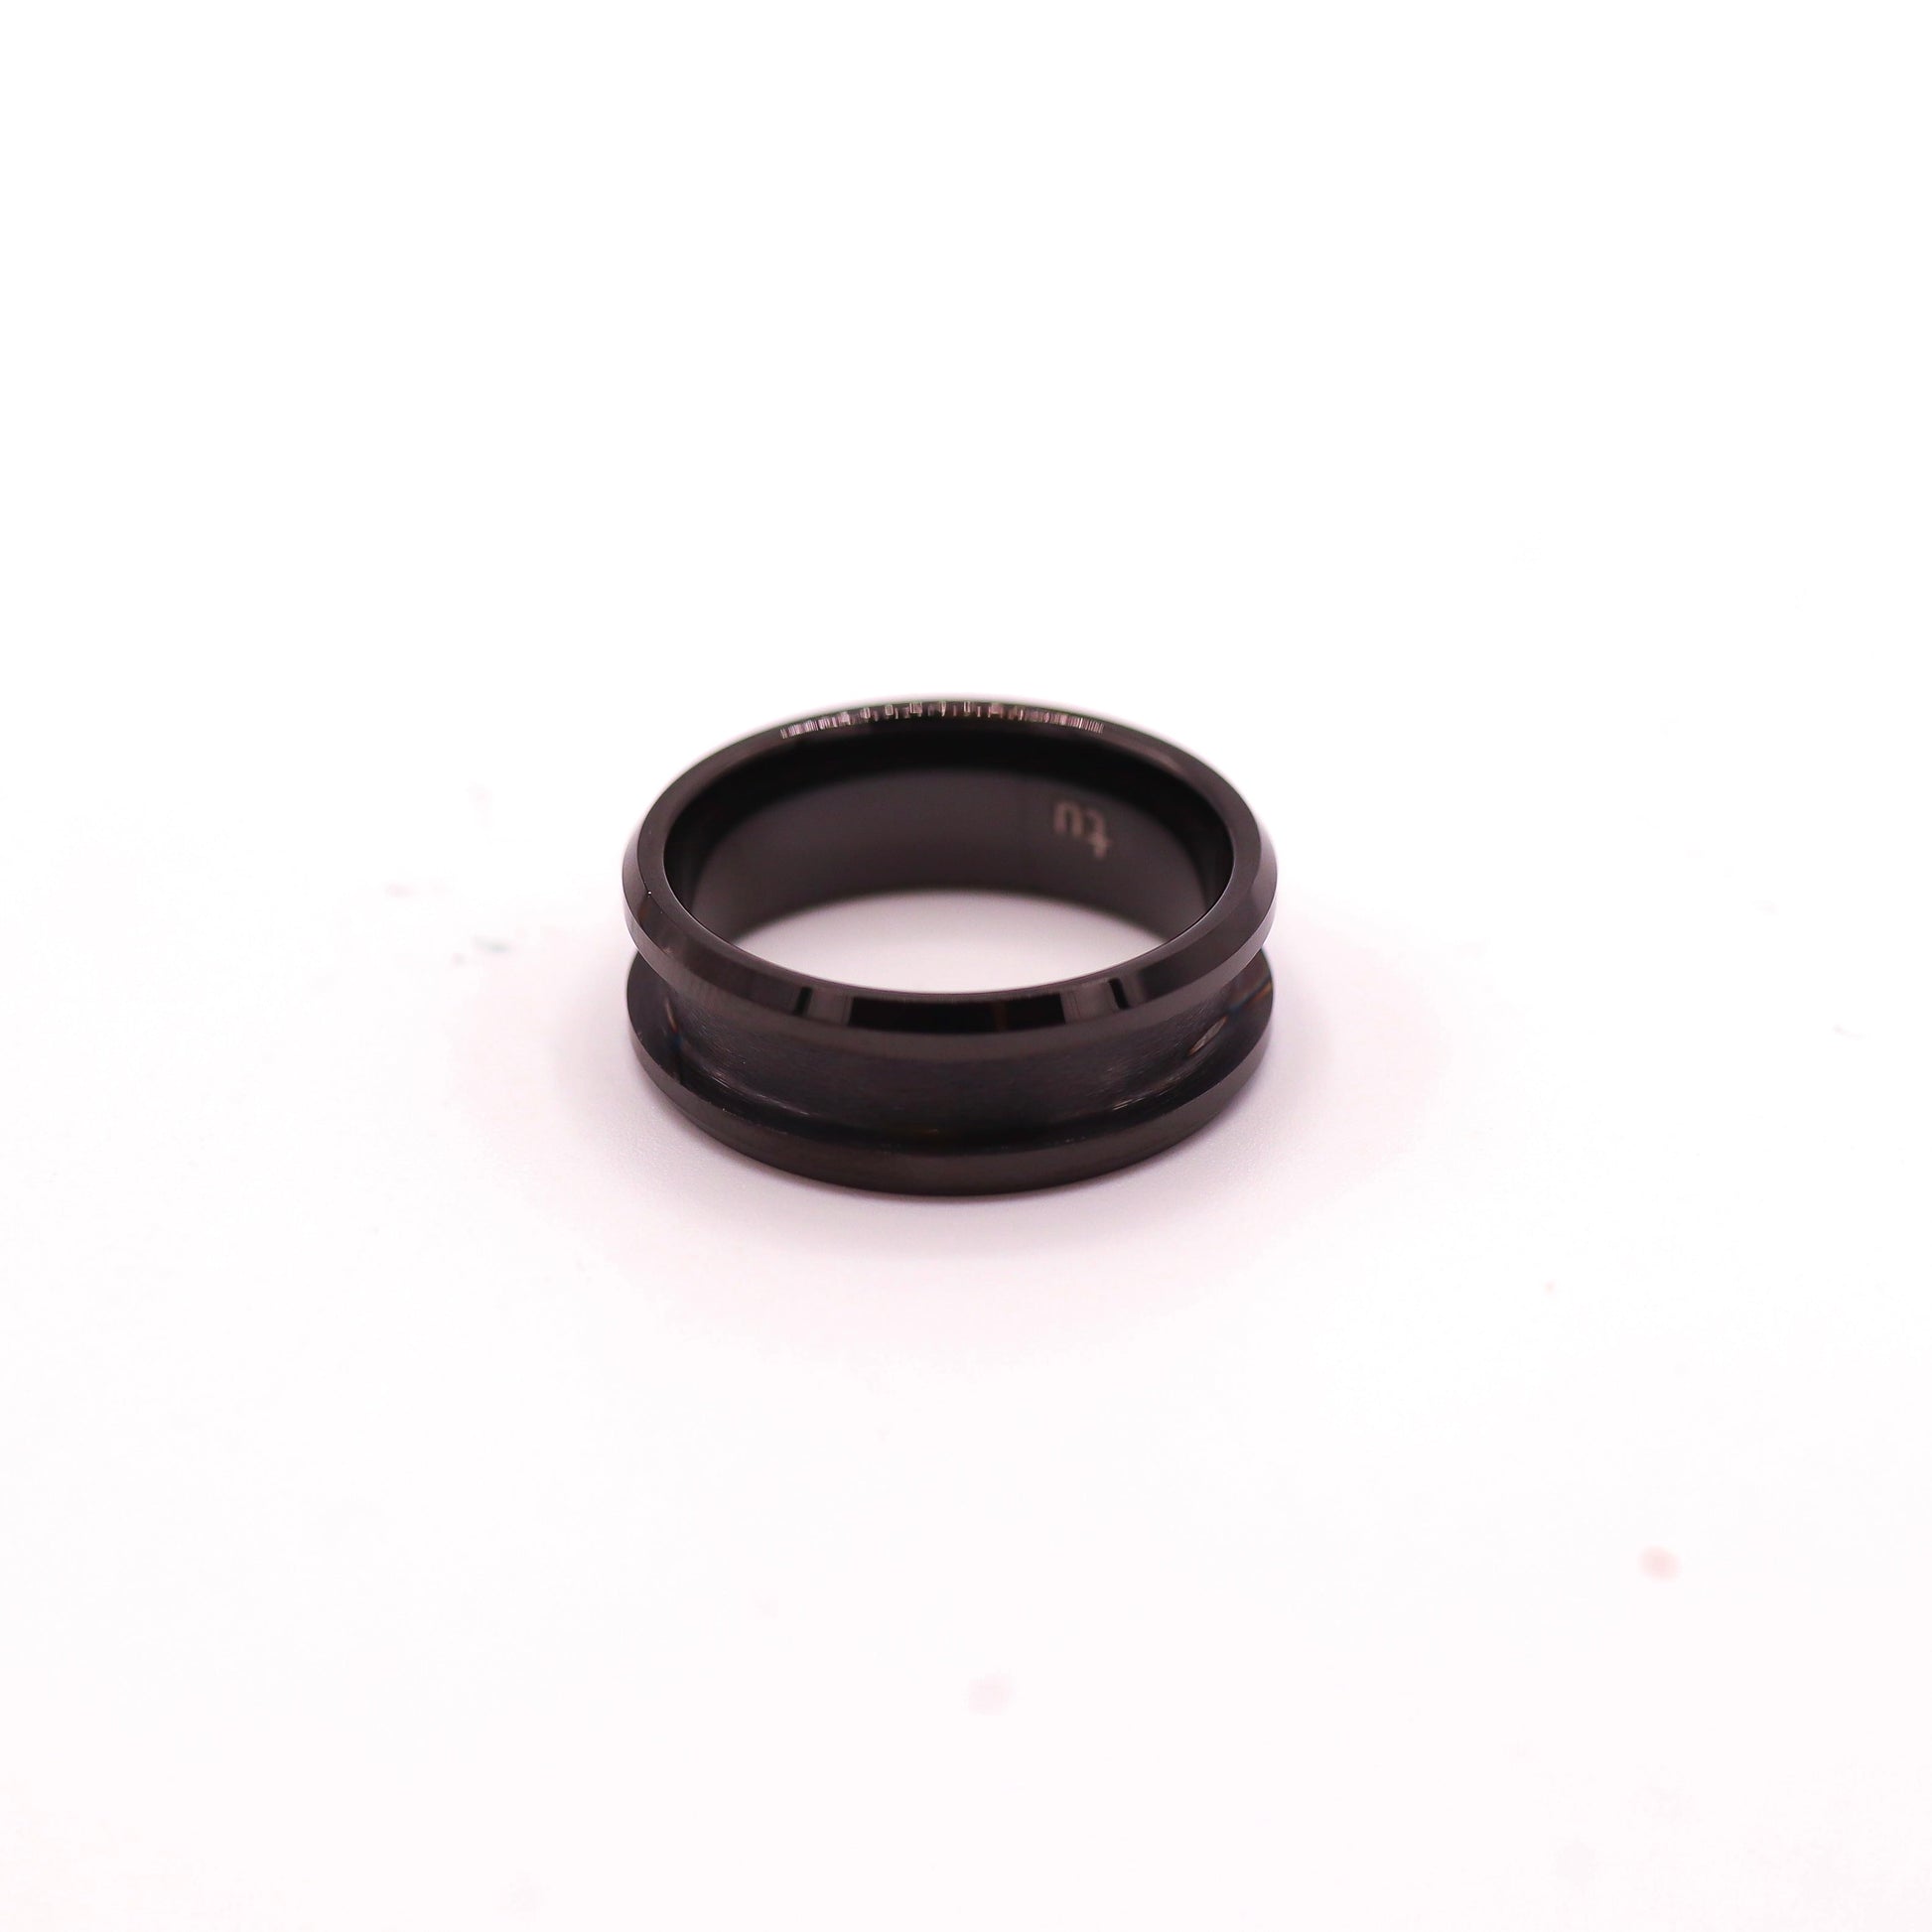 Black-Plated Tungsten Ring Blank - Patrick Adair Supplies